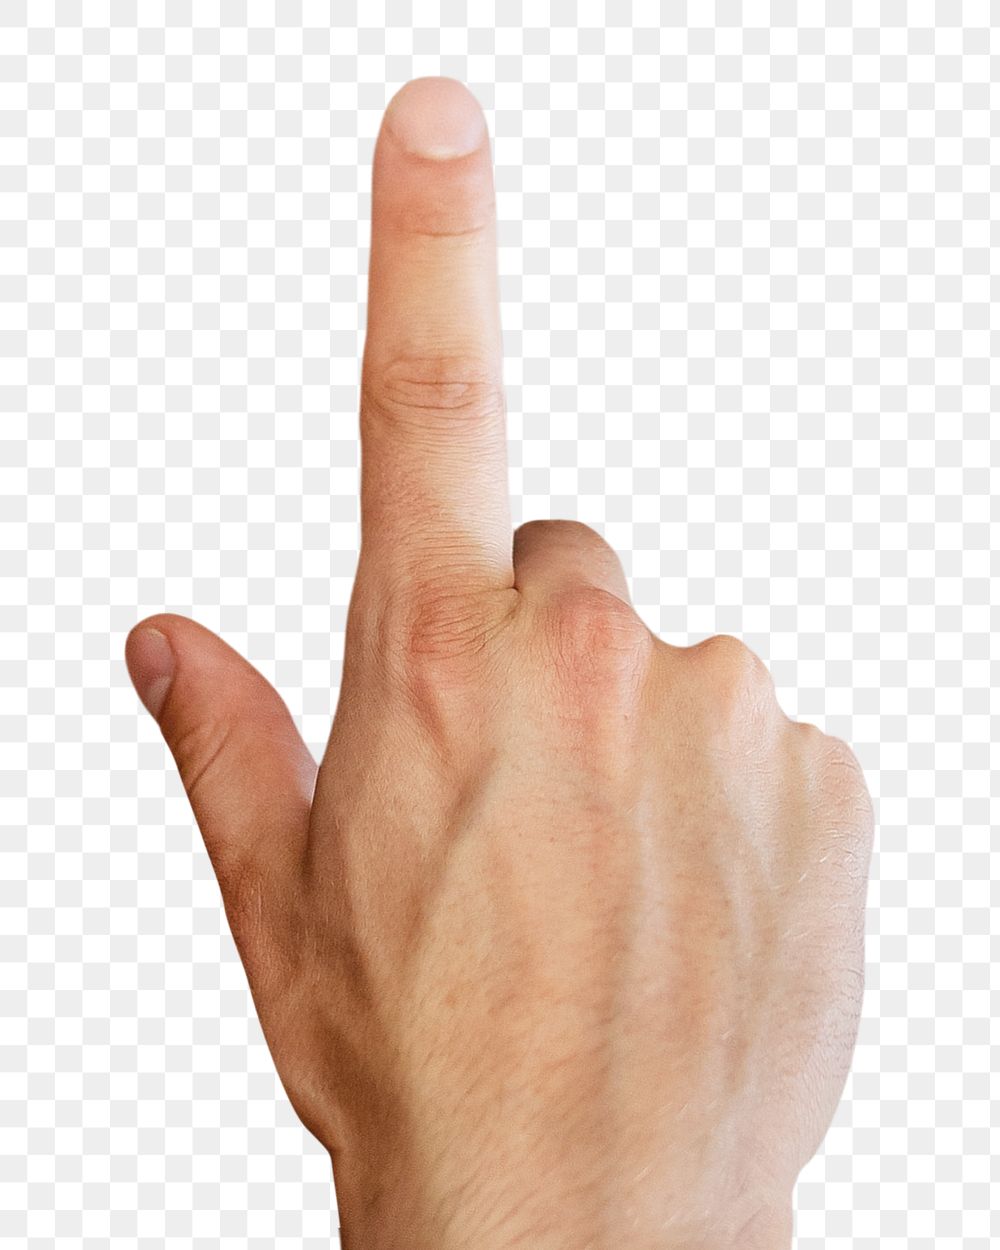 Click gesture png sticker, pointing finger, transparent background